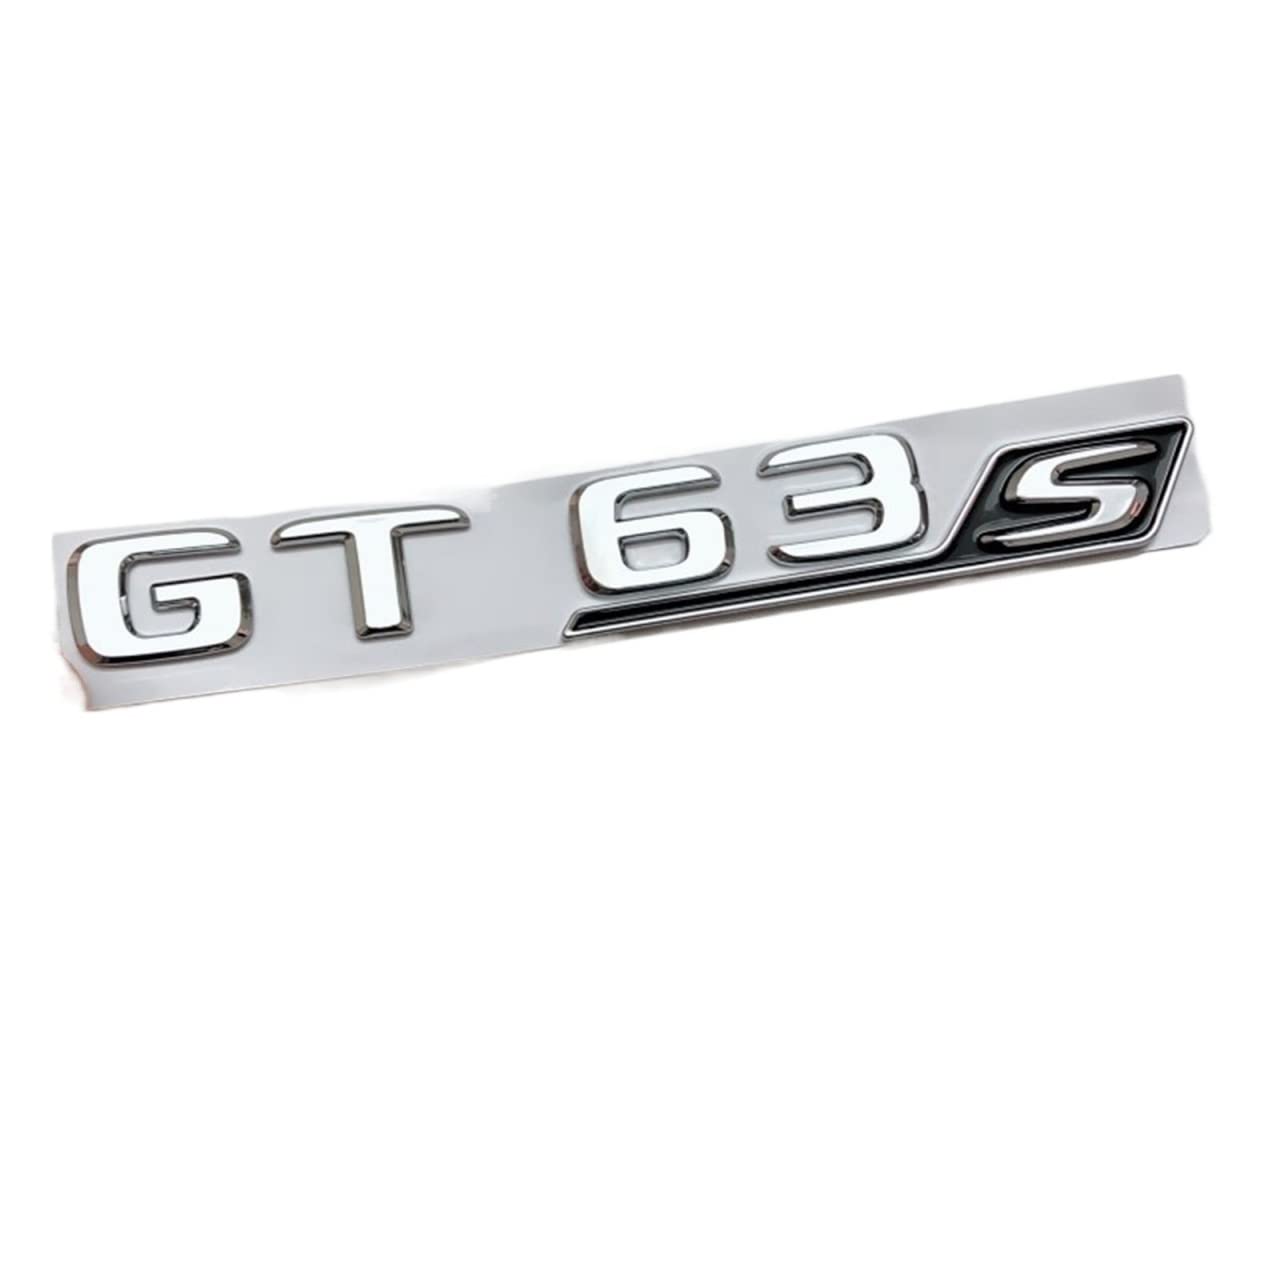 LHYFAGQK 3D ABS Heckkoffer Aufkleber Emblem Abzeichen Aufkleber passend for Mercedes AMG GT RSC GTR GTS GT50 GT43 GT53 GT63S W190 W251 Autozubehör Abzeichen Autoaufkleber(GT63S Silver Black) von LHYFAGQK